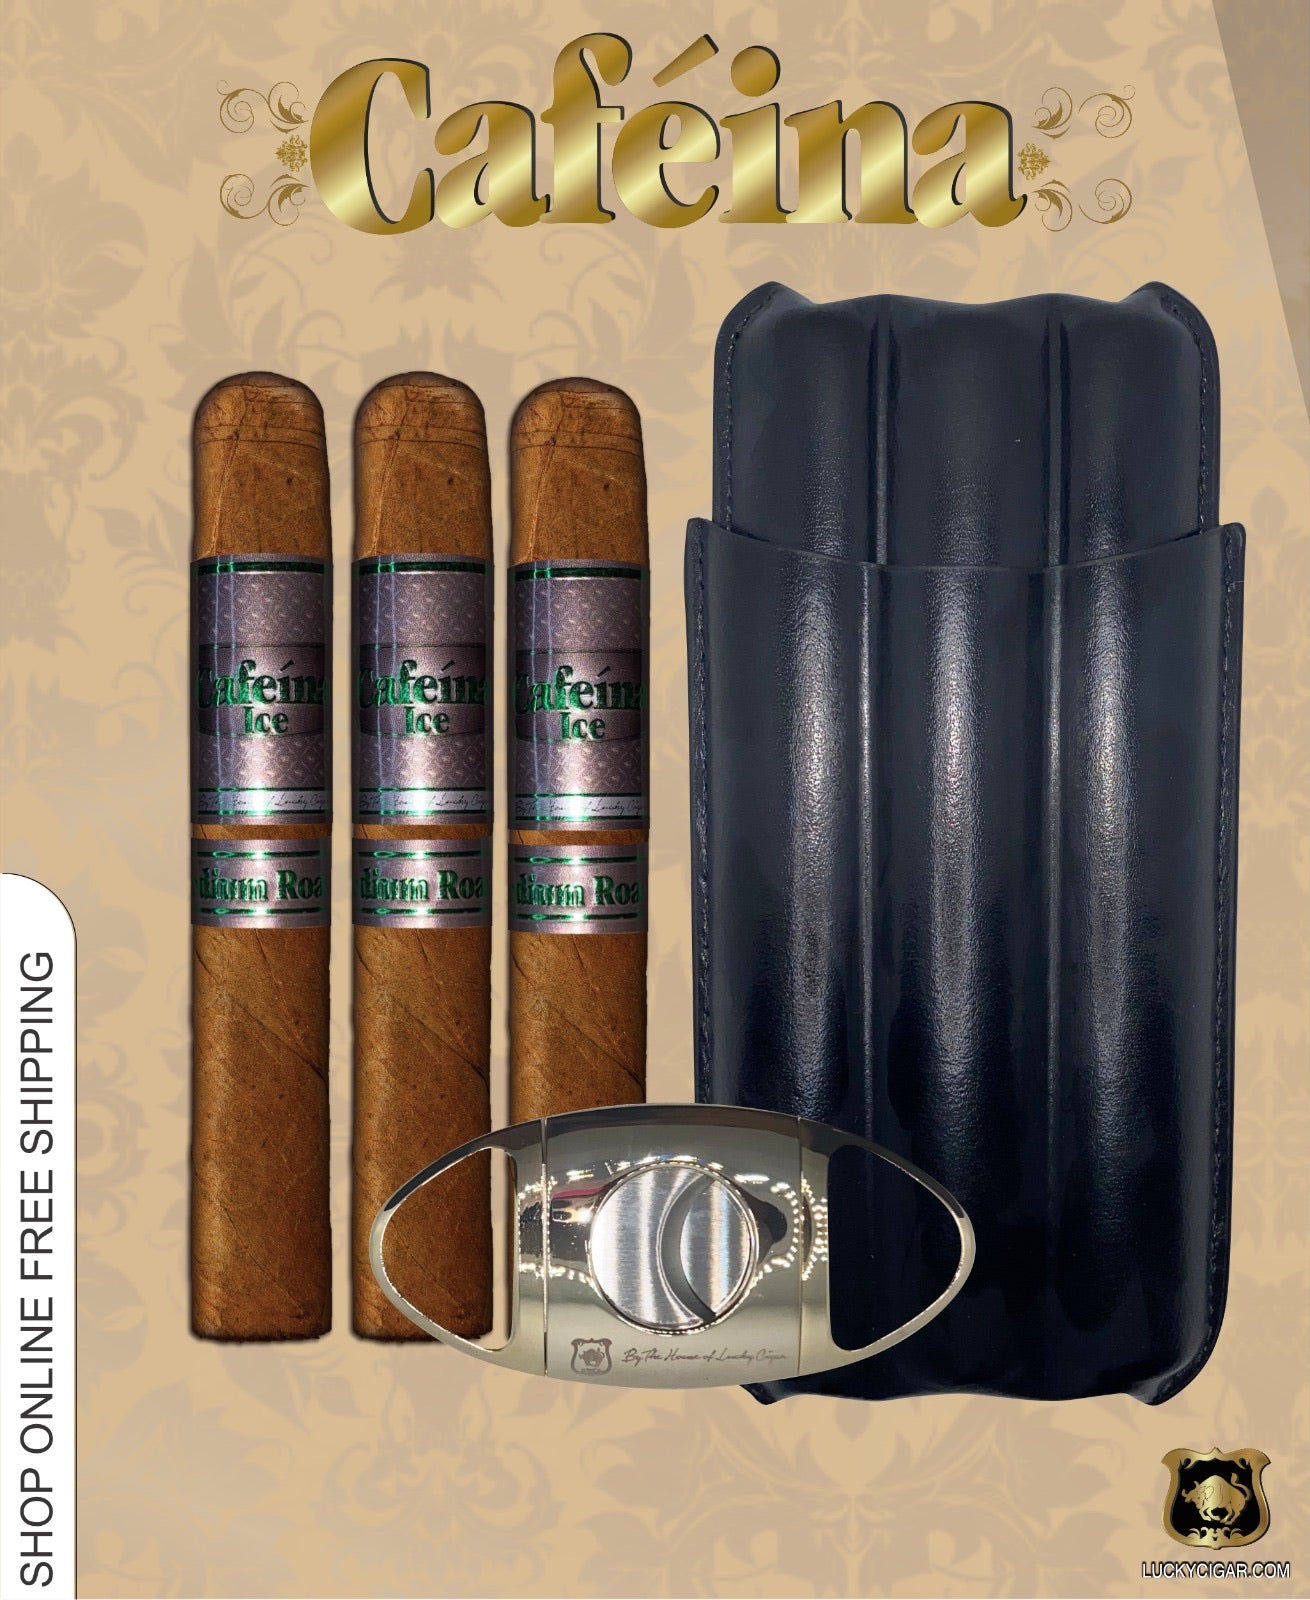 Infused Cigars: Set of 3 Cafeina Ice Medium Roast Toro 6x52 Cigars with Travel Humidor, Cutter